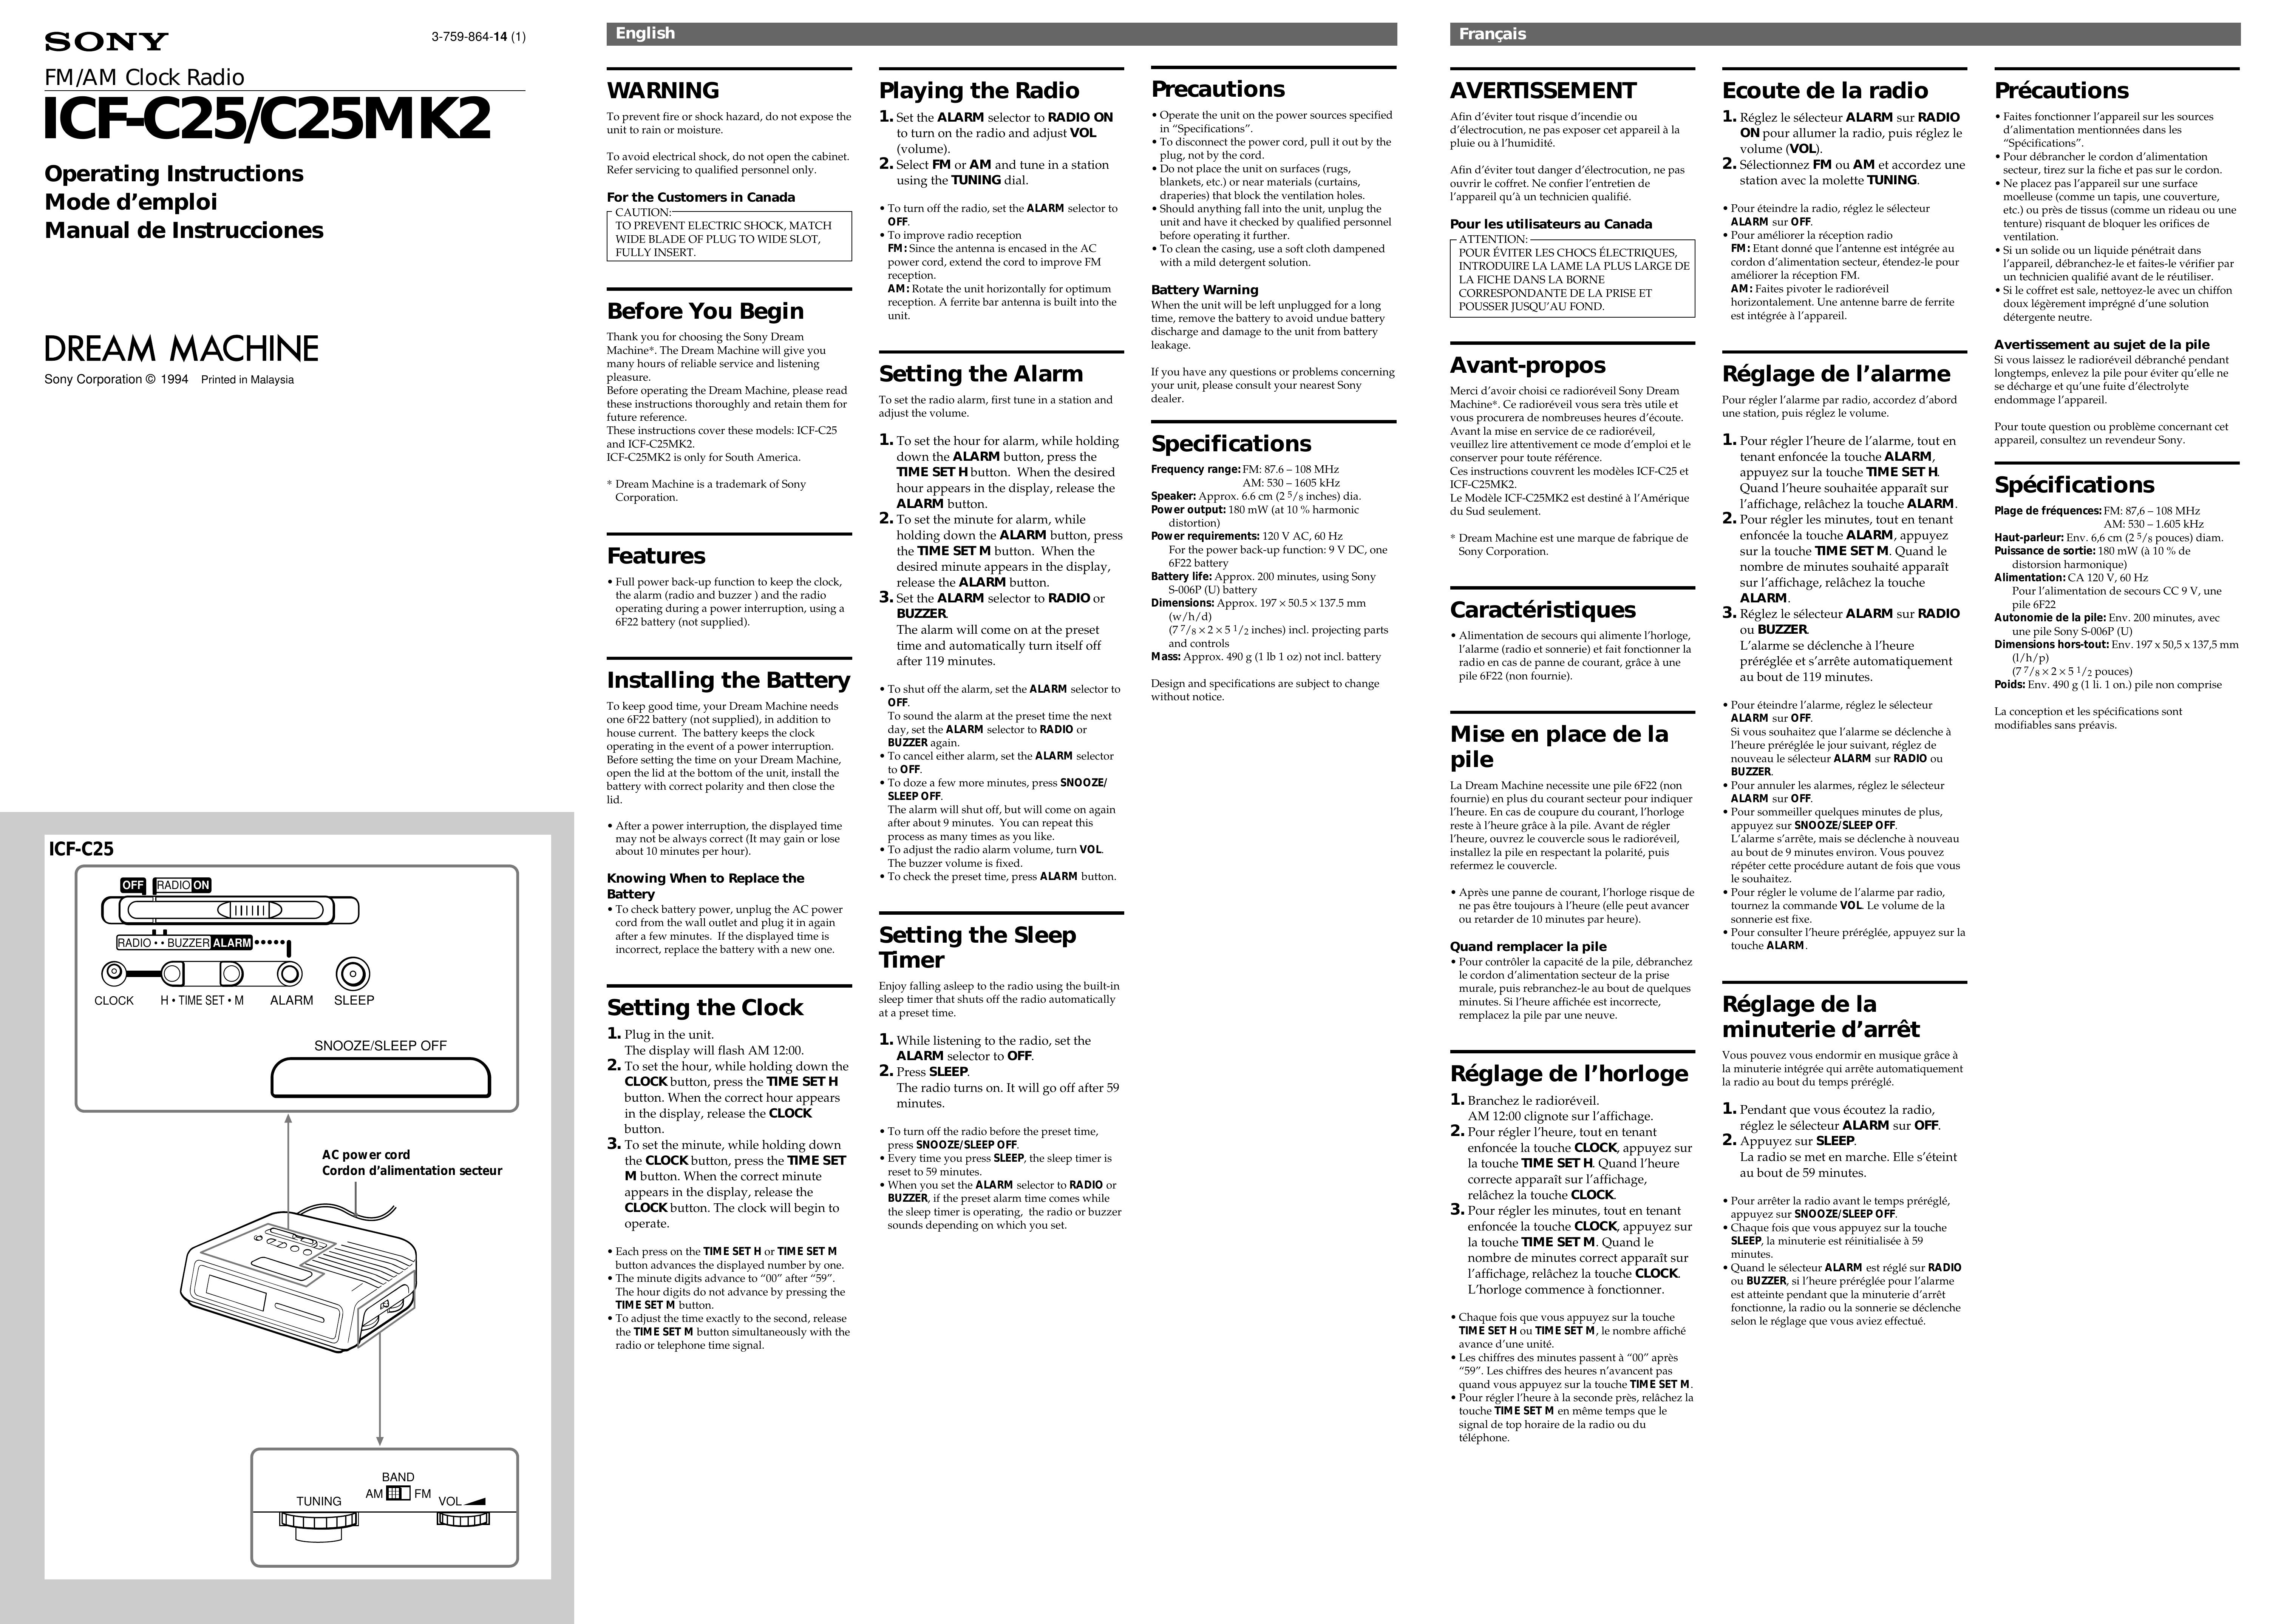 Sony ICF-C25 Clock Radio User Manual